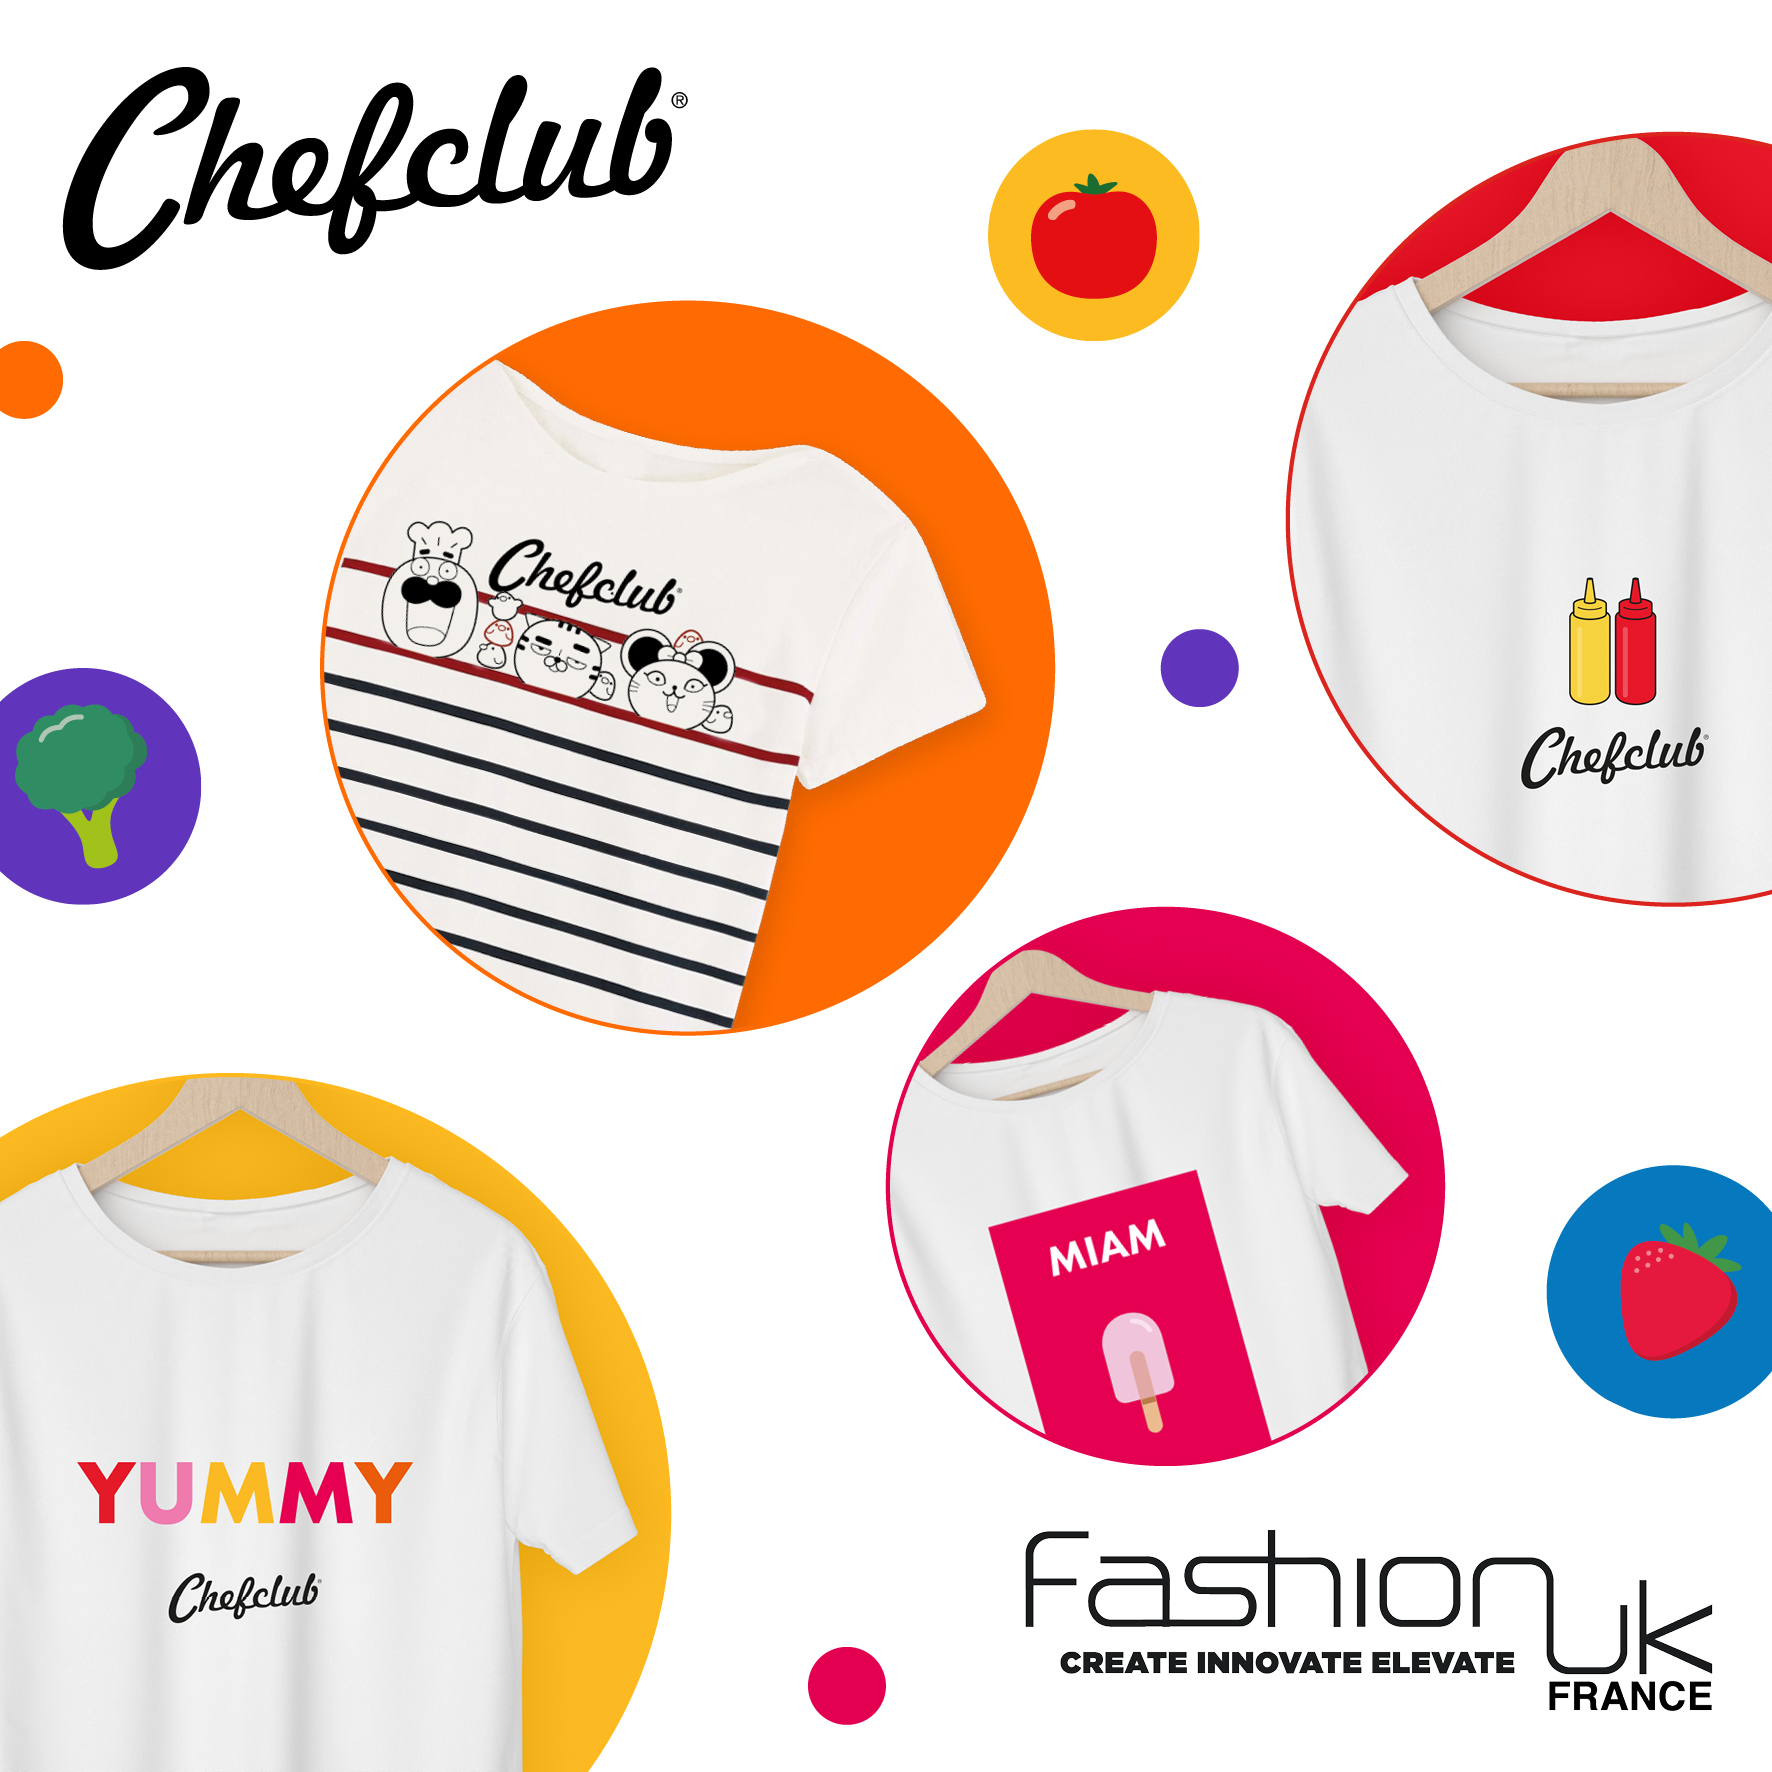 Chefclub x Fashion UK